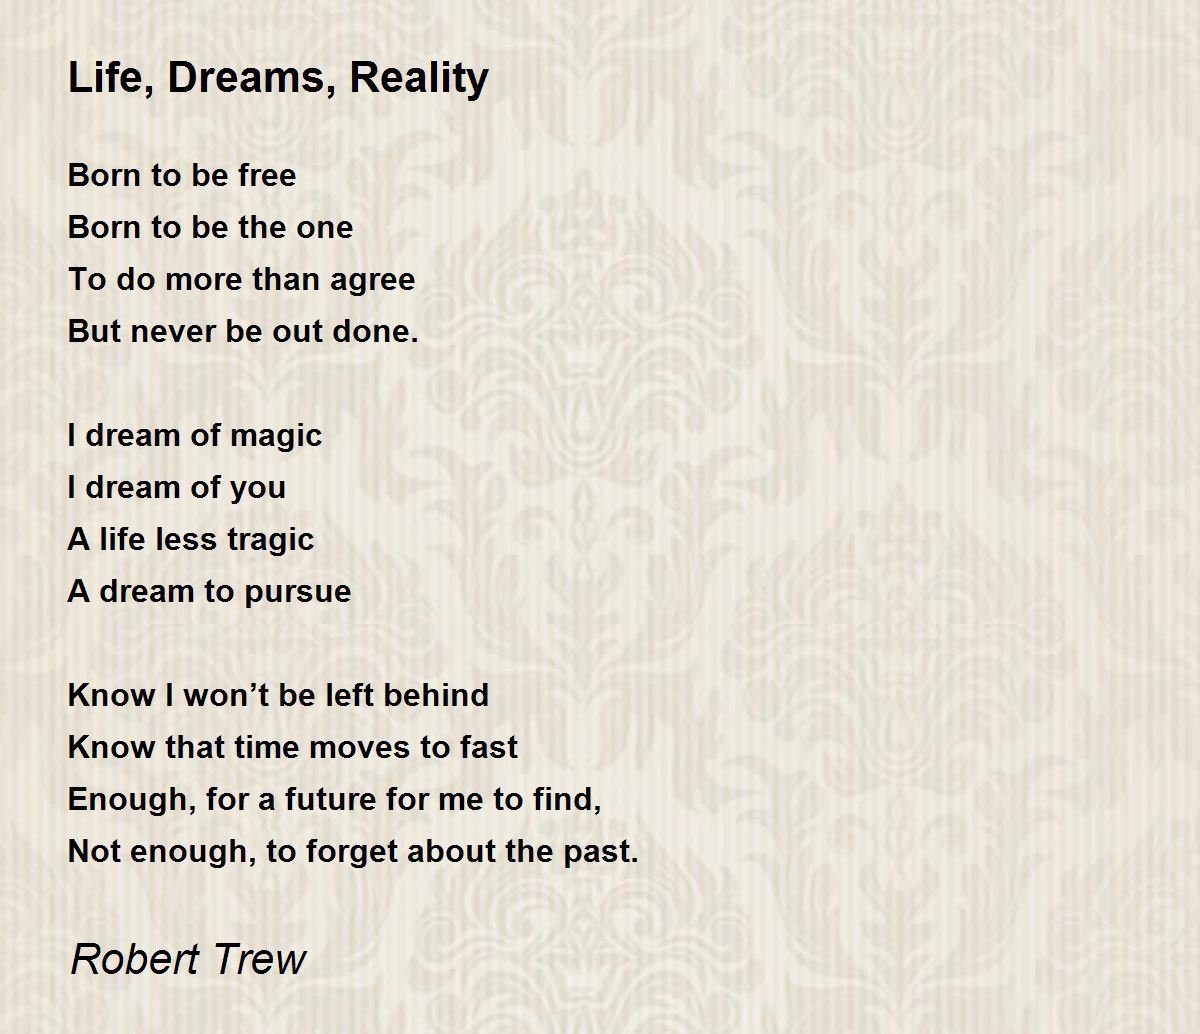 Life, Dreams, Reality - Life, Dreams, Reality Poem by Robert Trew